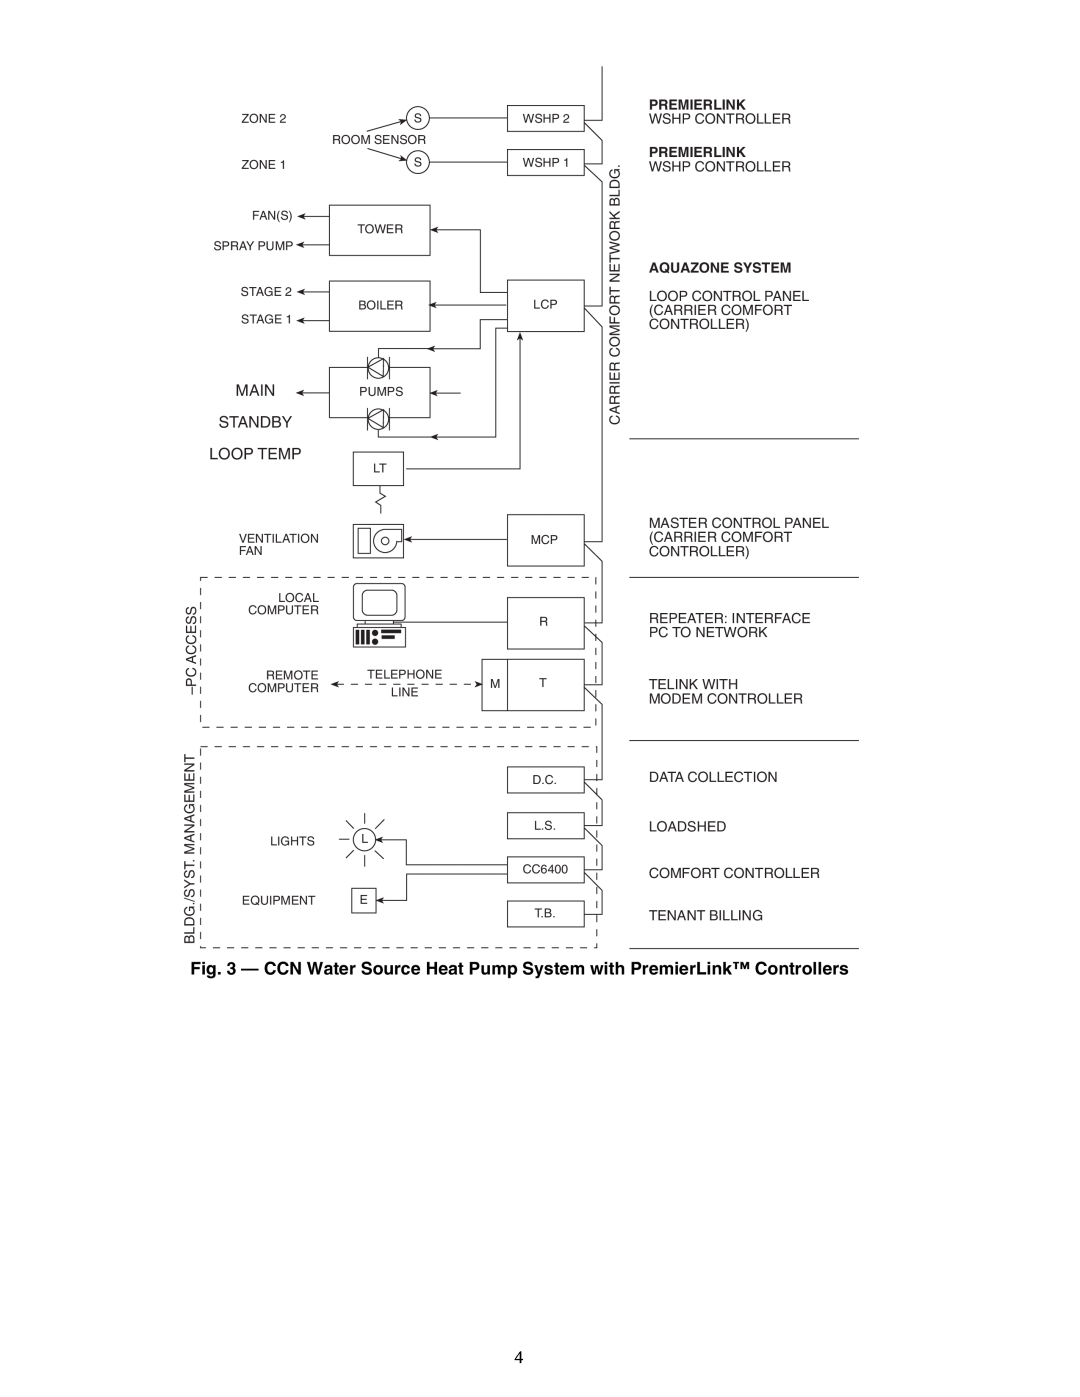 Carrier 50RLP installation instructions Main Standby Loop Temp, Premierlink, Aquazone System 